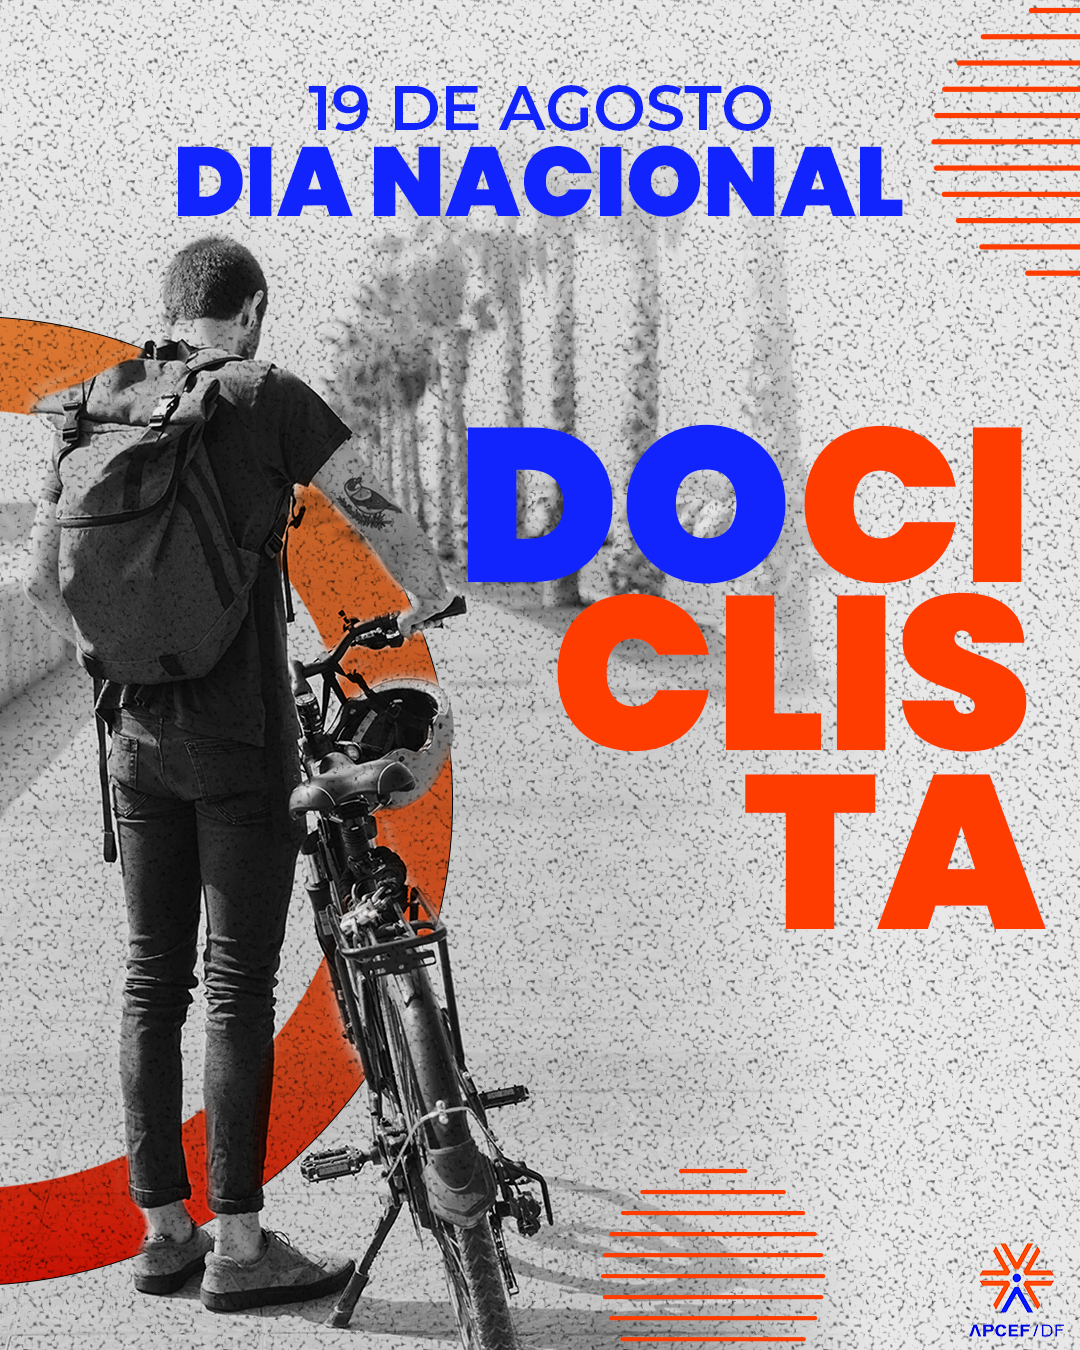 DIA-NACIONAL-DO-CICLISTA.png